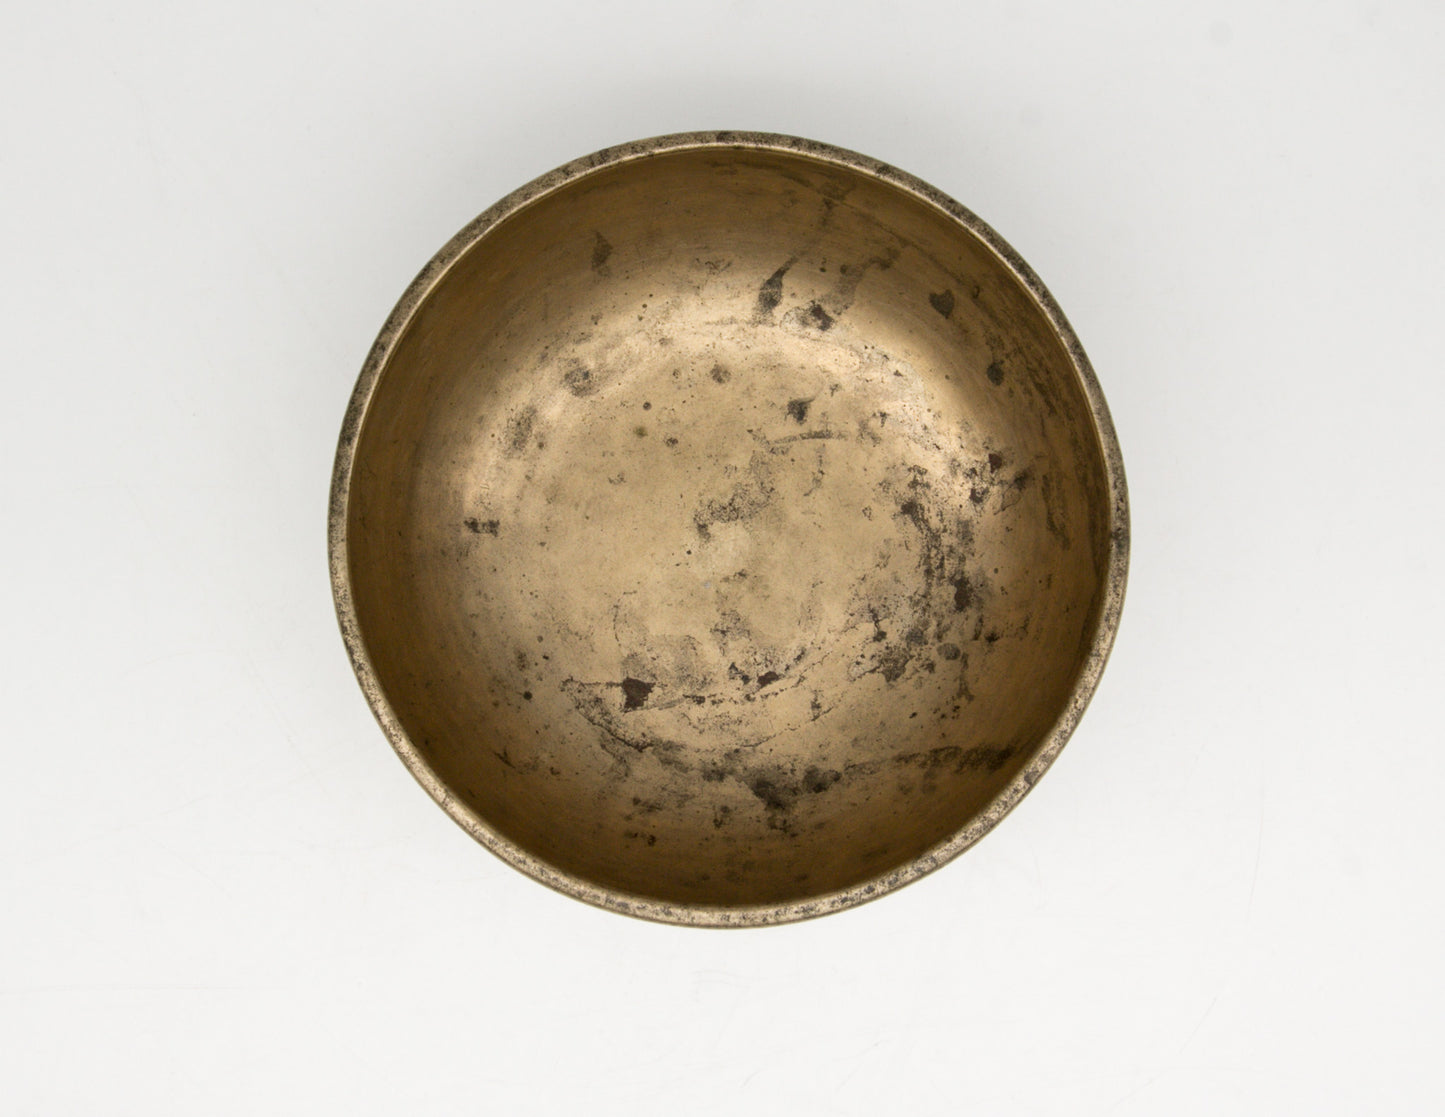 Handcrafted Singing Bowl – 15.5cm E tone